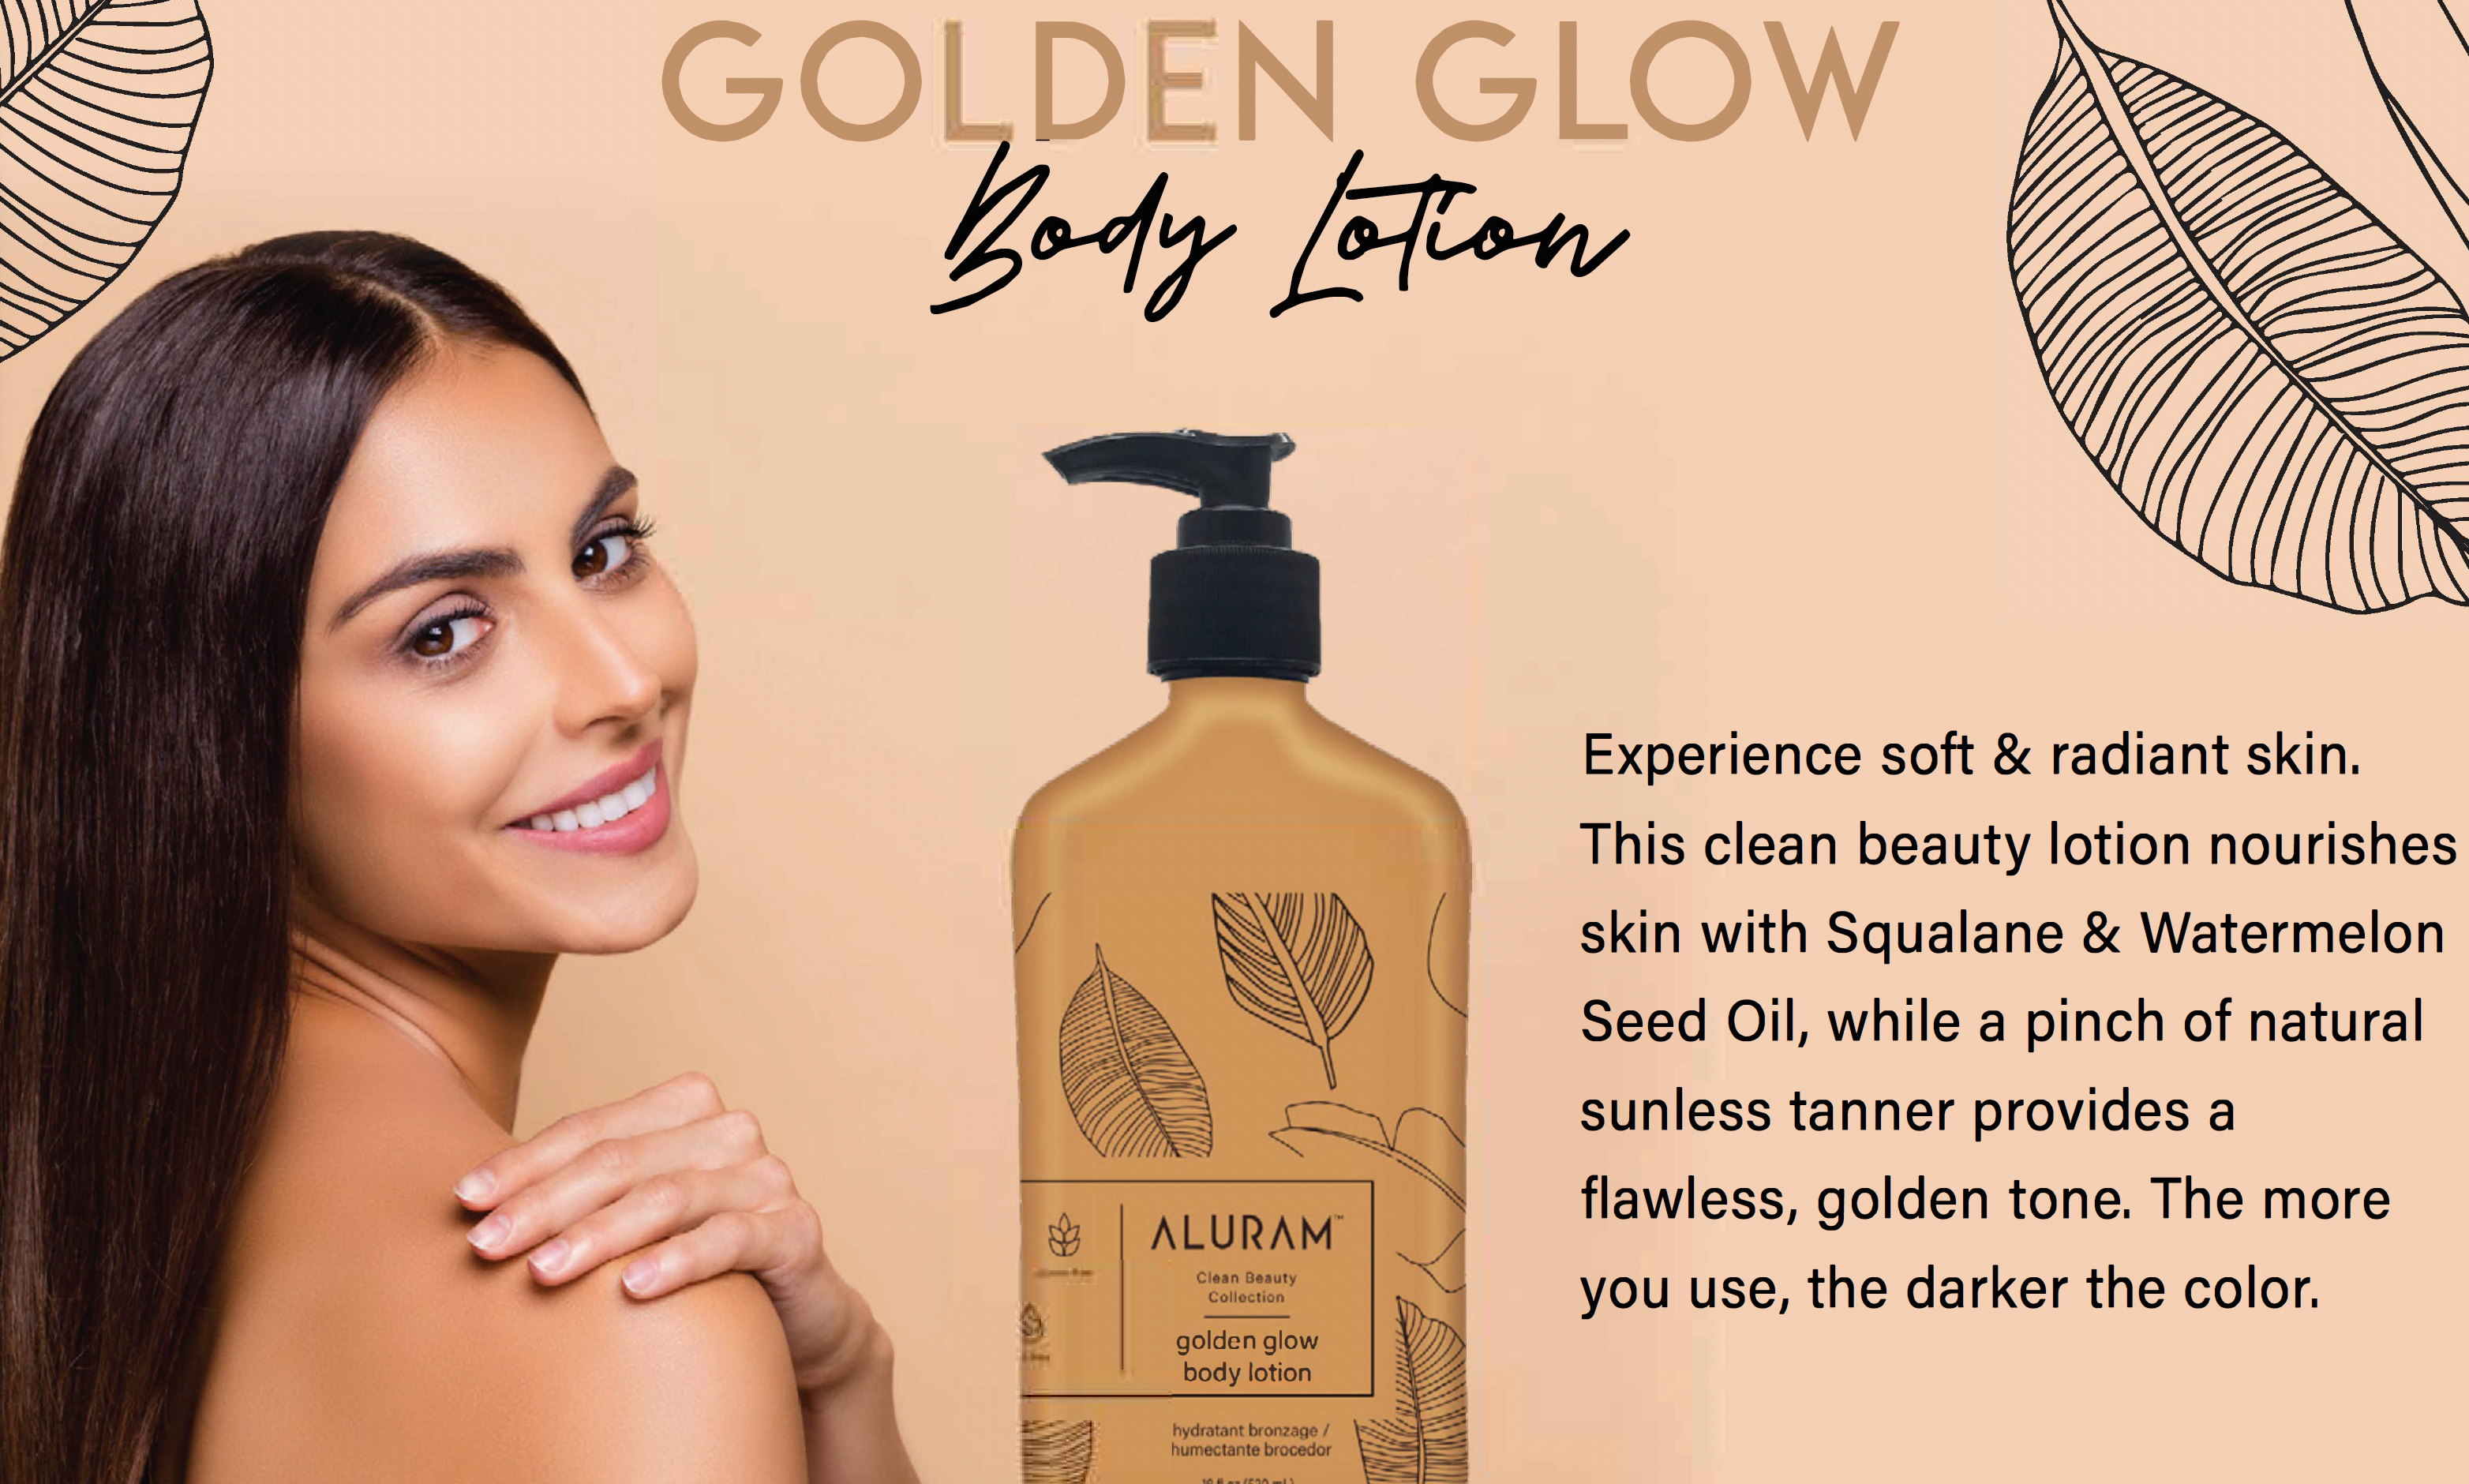 Aluram Golden Glow Body Lotion 18 oz. - 530 mL Skin Moisturizer & Natural Sunless Tanner